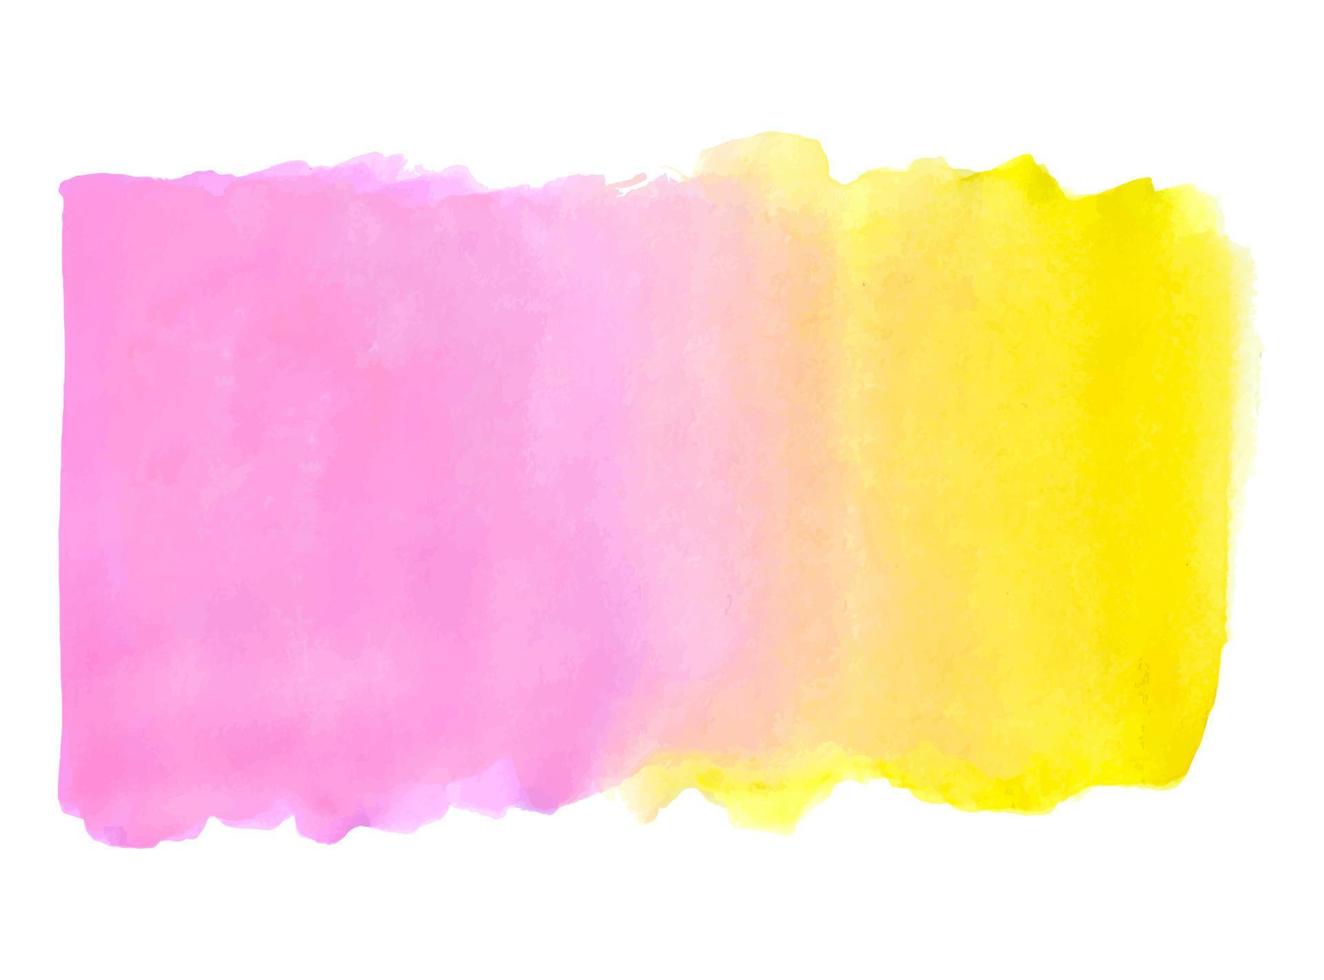 Mancha amarilla-rosa abstracta de acuarela aislada sobre fondo blanco. vector dibujado a mano de trazos de pincel. textura coloreada.